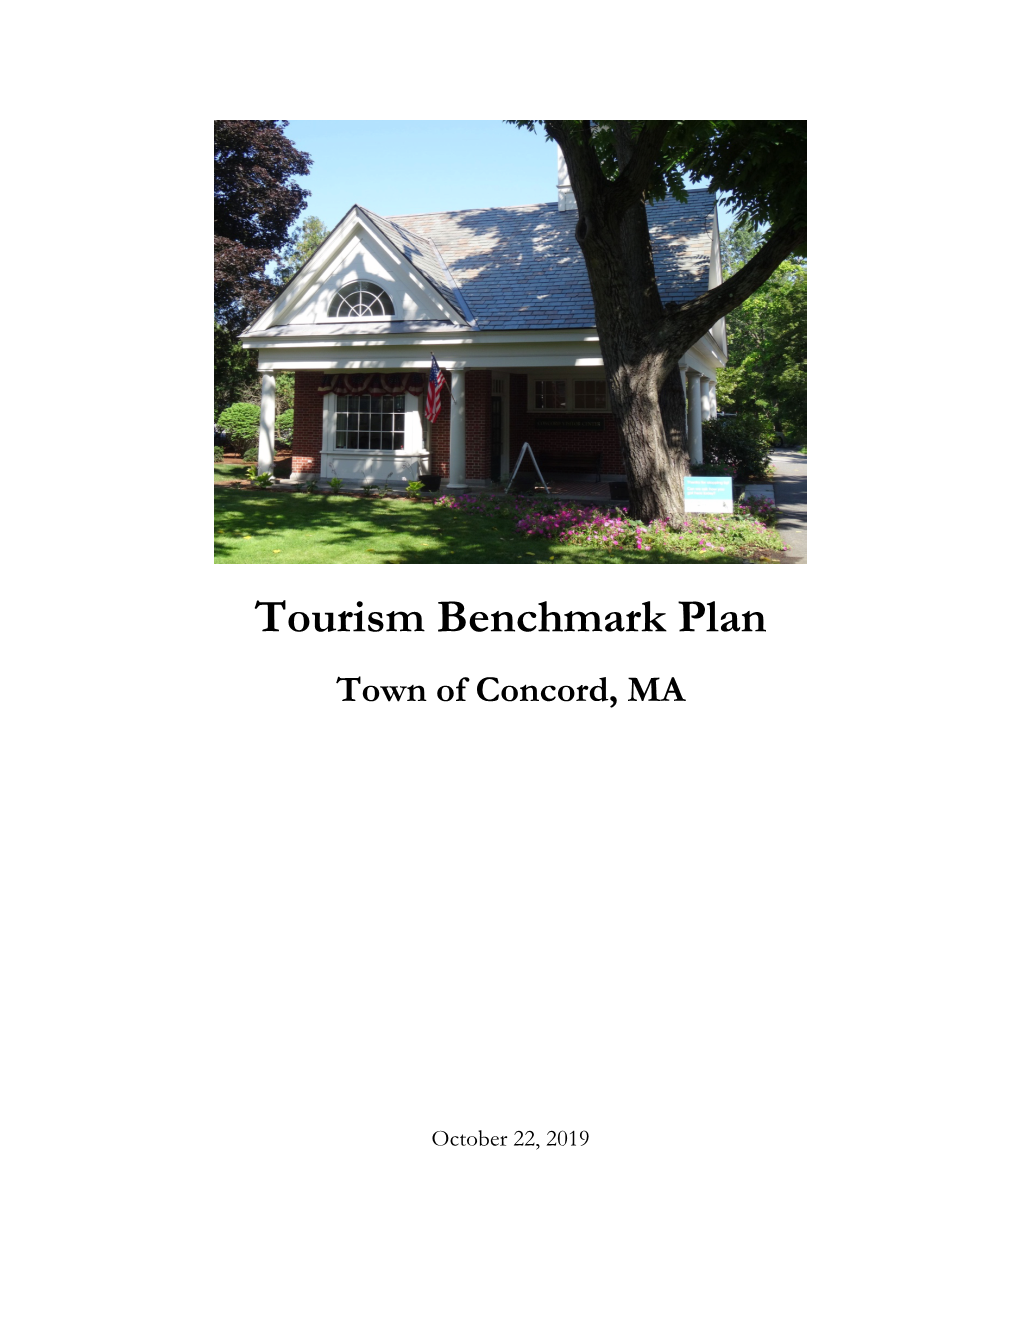 Concord Tourism Strategic Plan